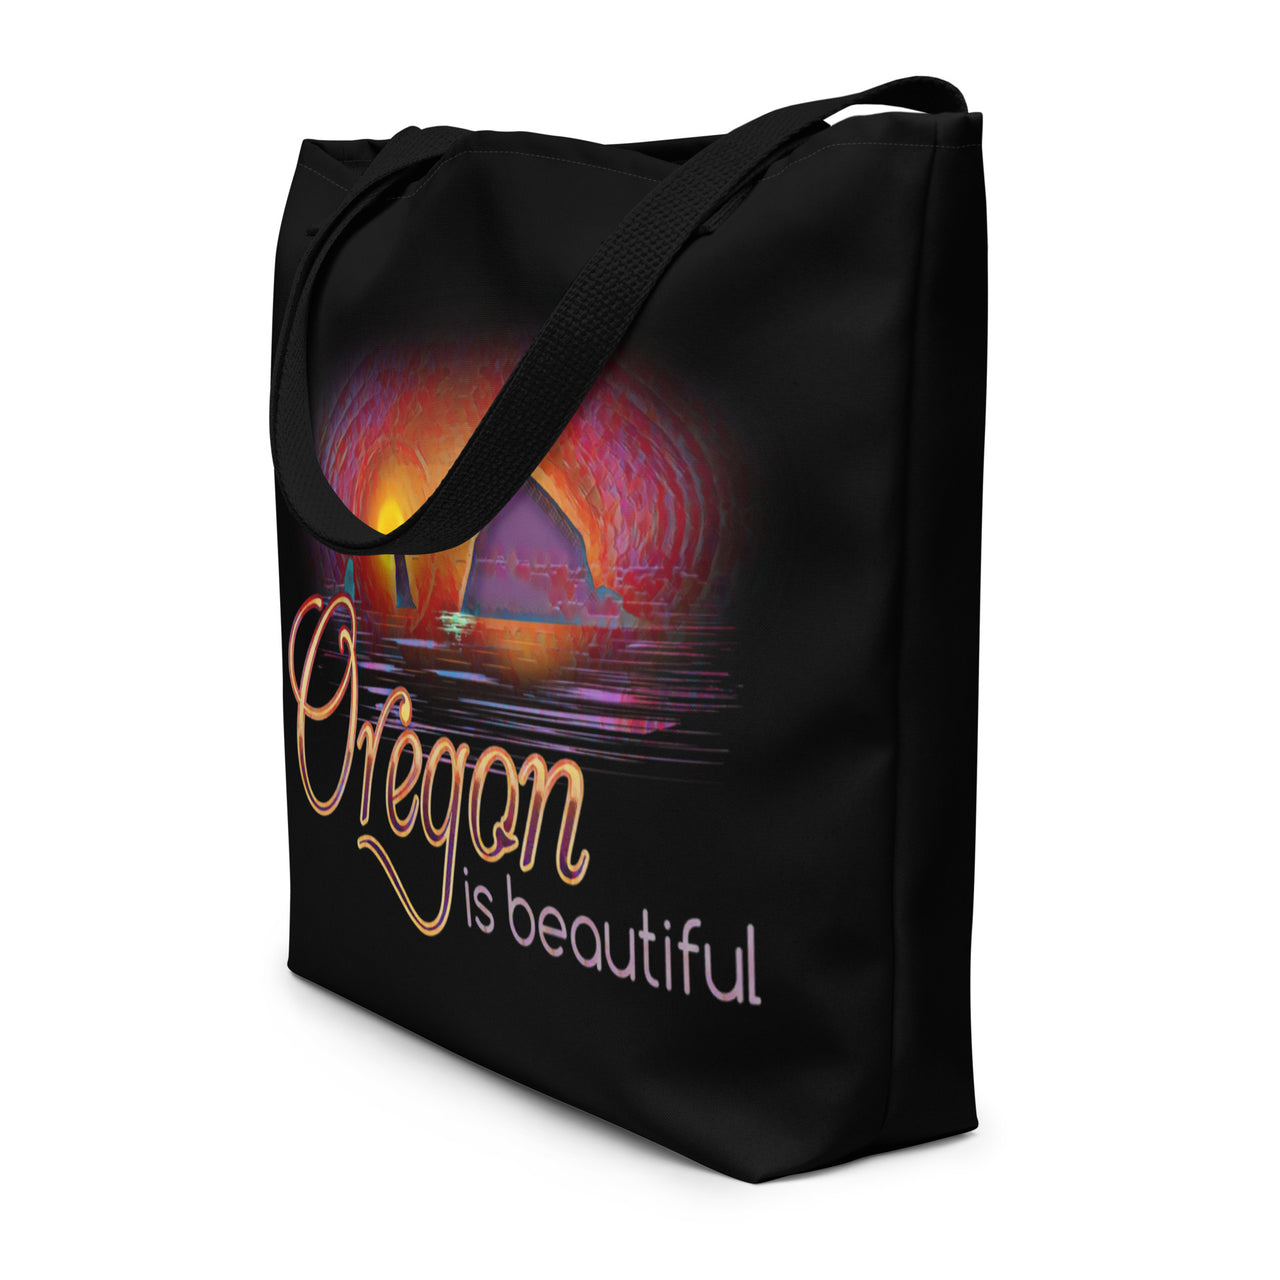 Oregon is Beautiful - Oregon - Digital Art - Large 16x20 Tote Bag W/Pocket